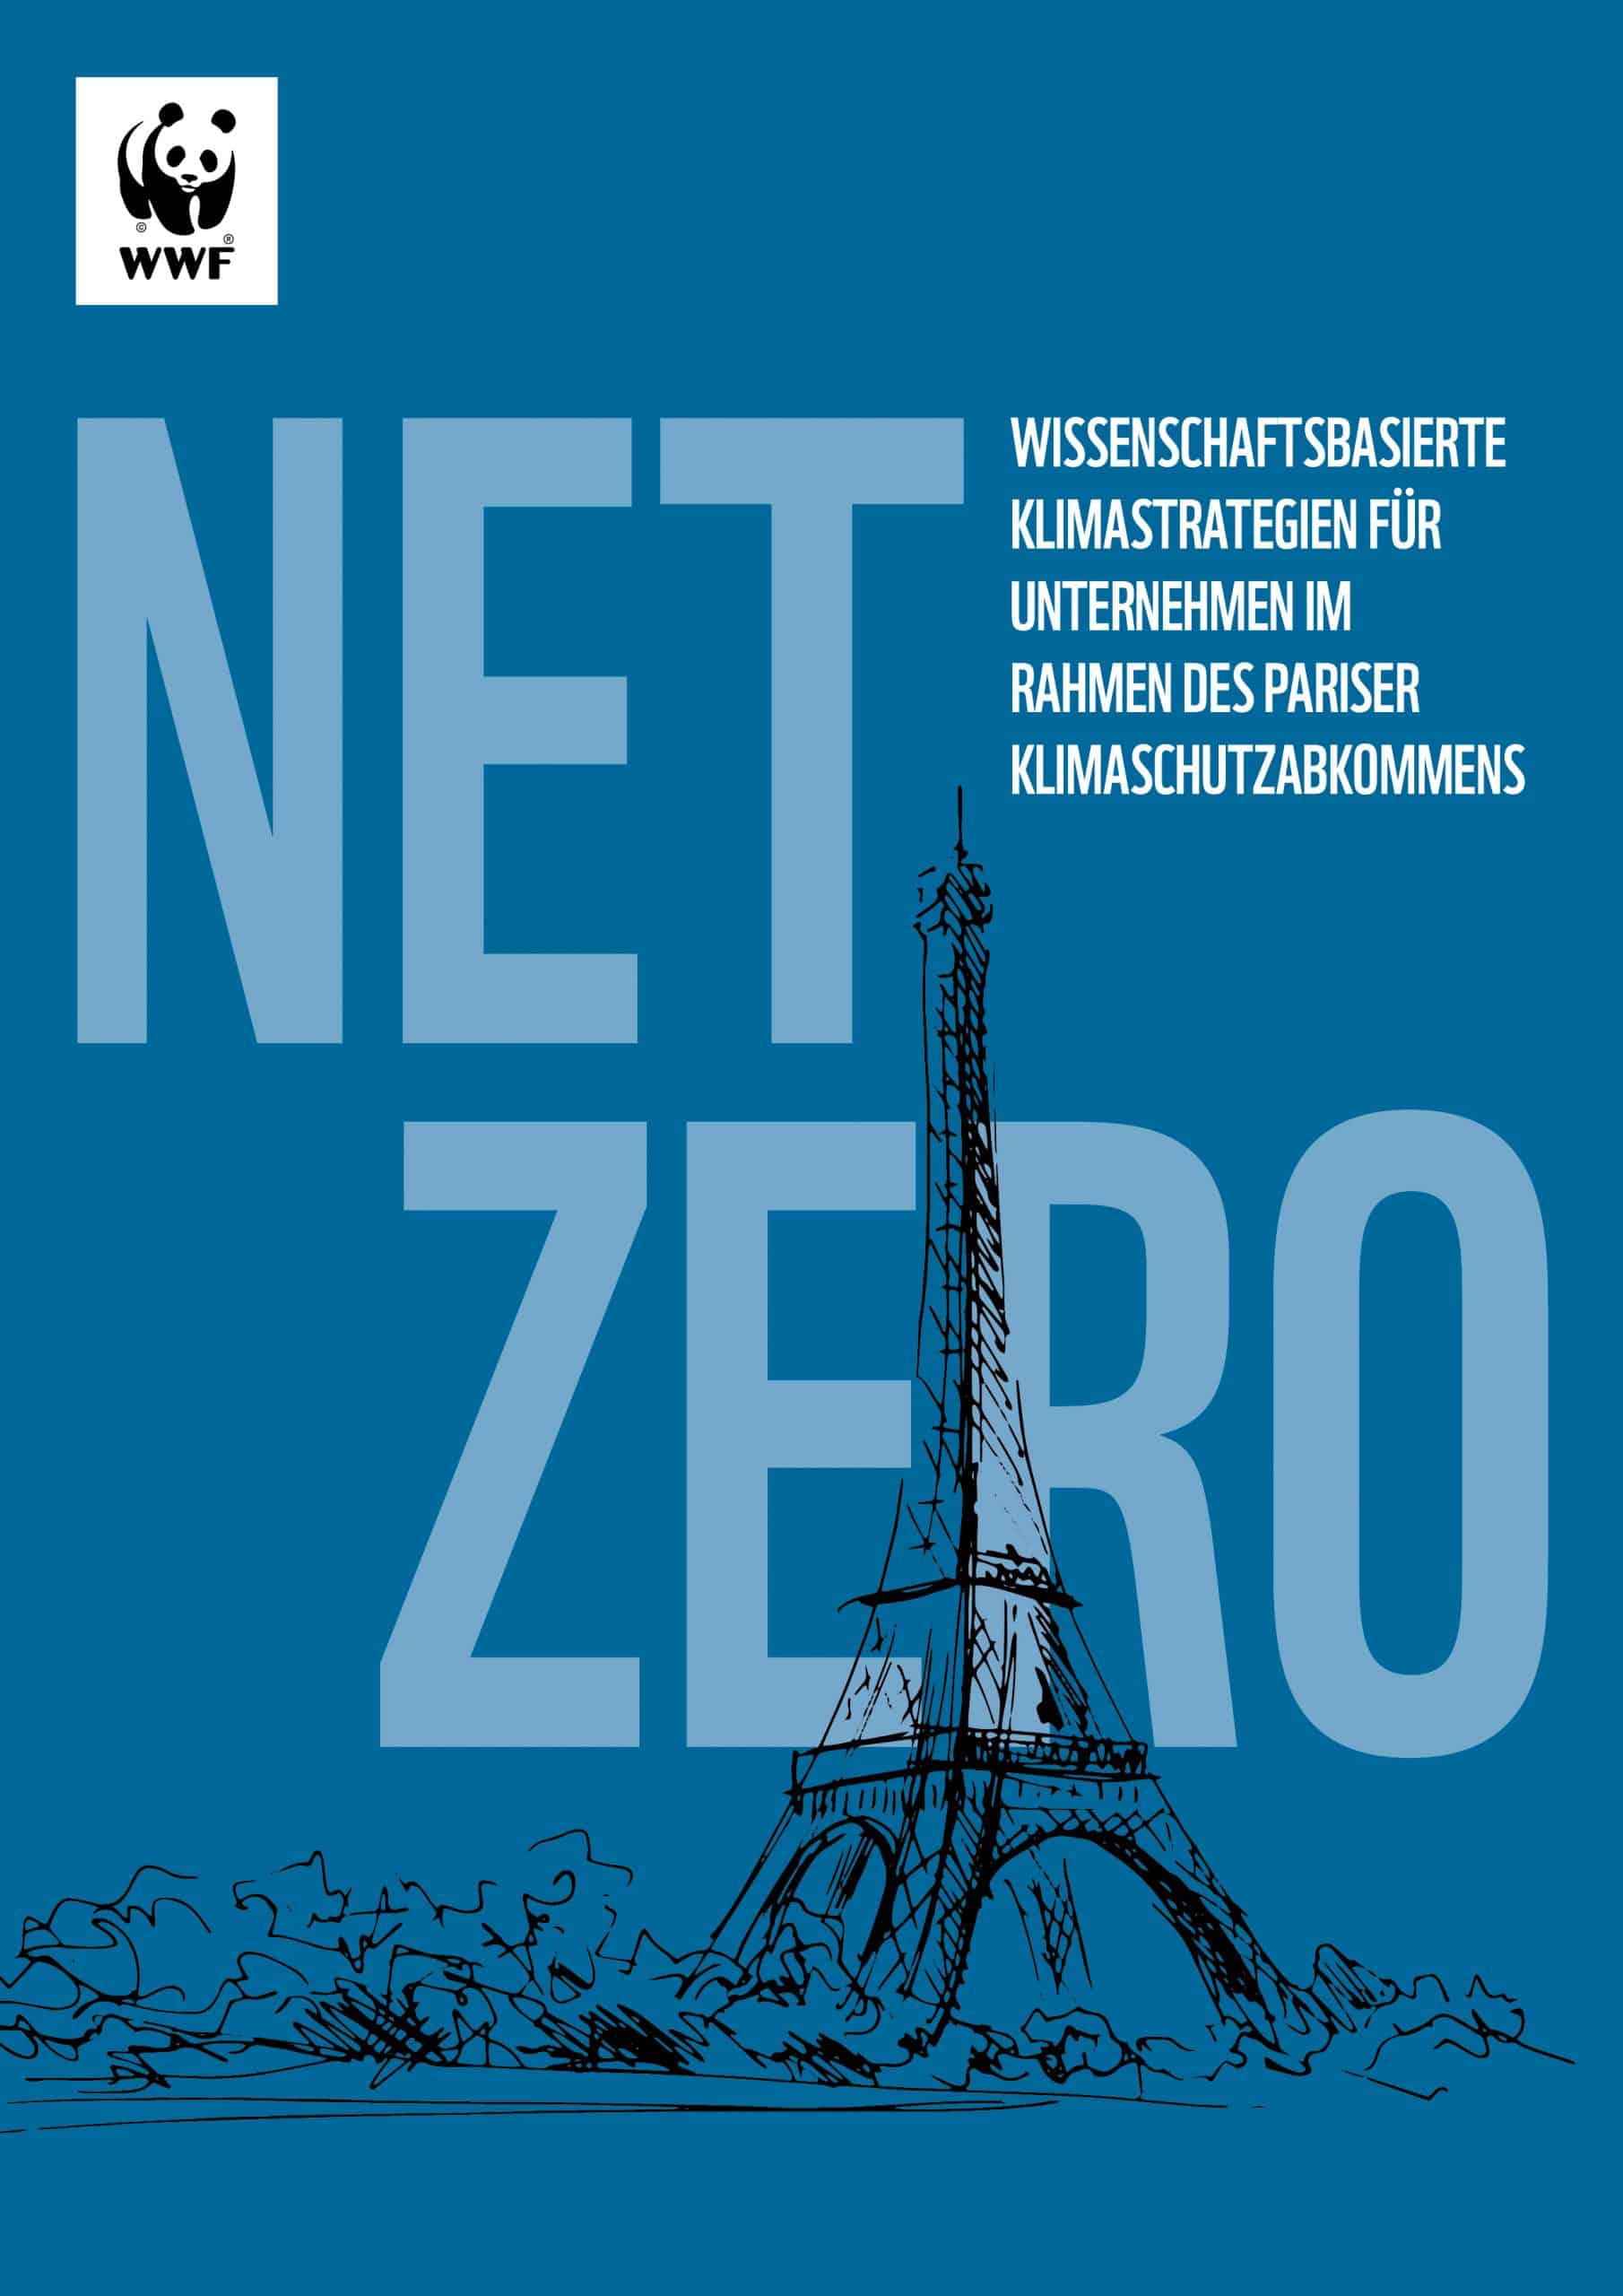 Download WWF NET ZERO Paper